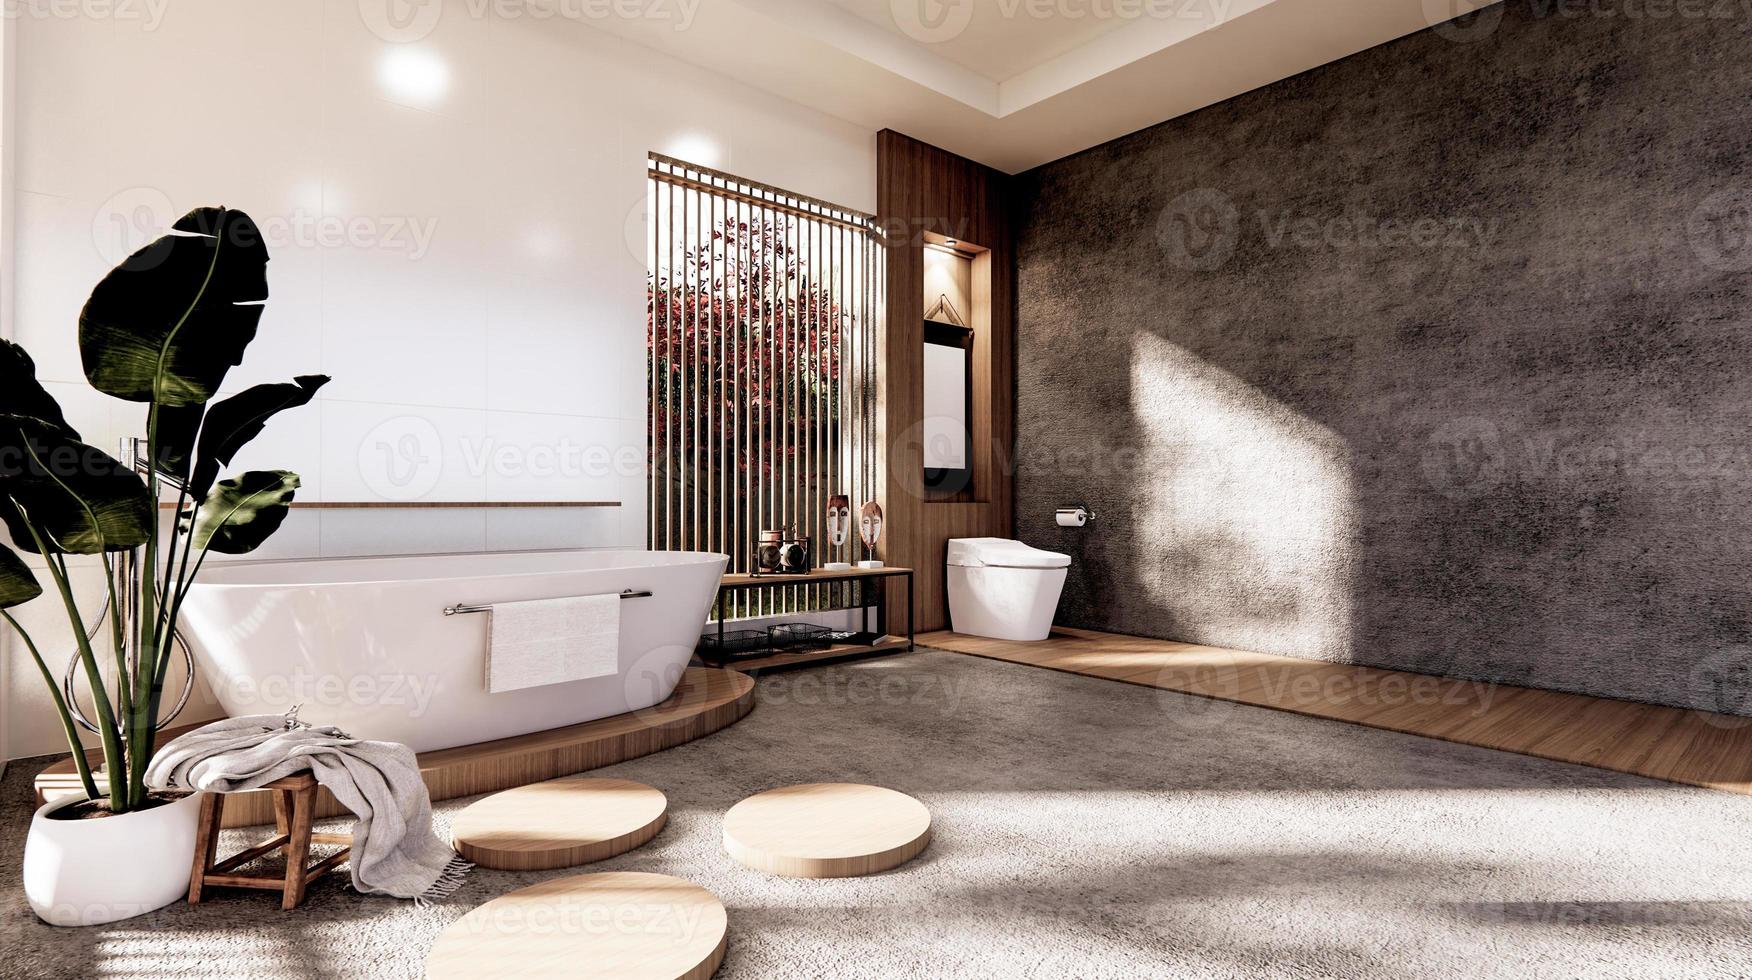 badet och toaletten på badrummet zen stil .3d rendering foto